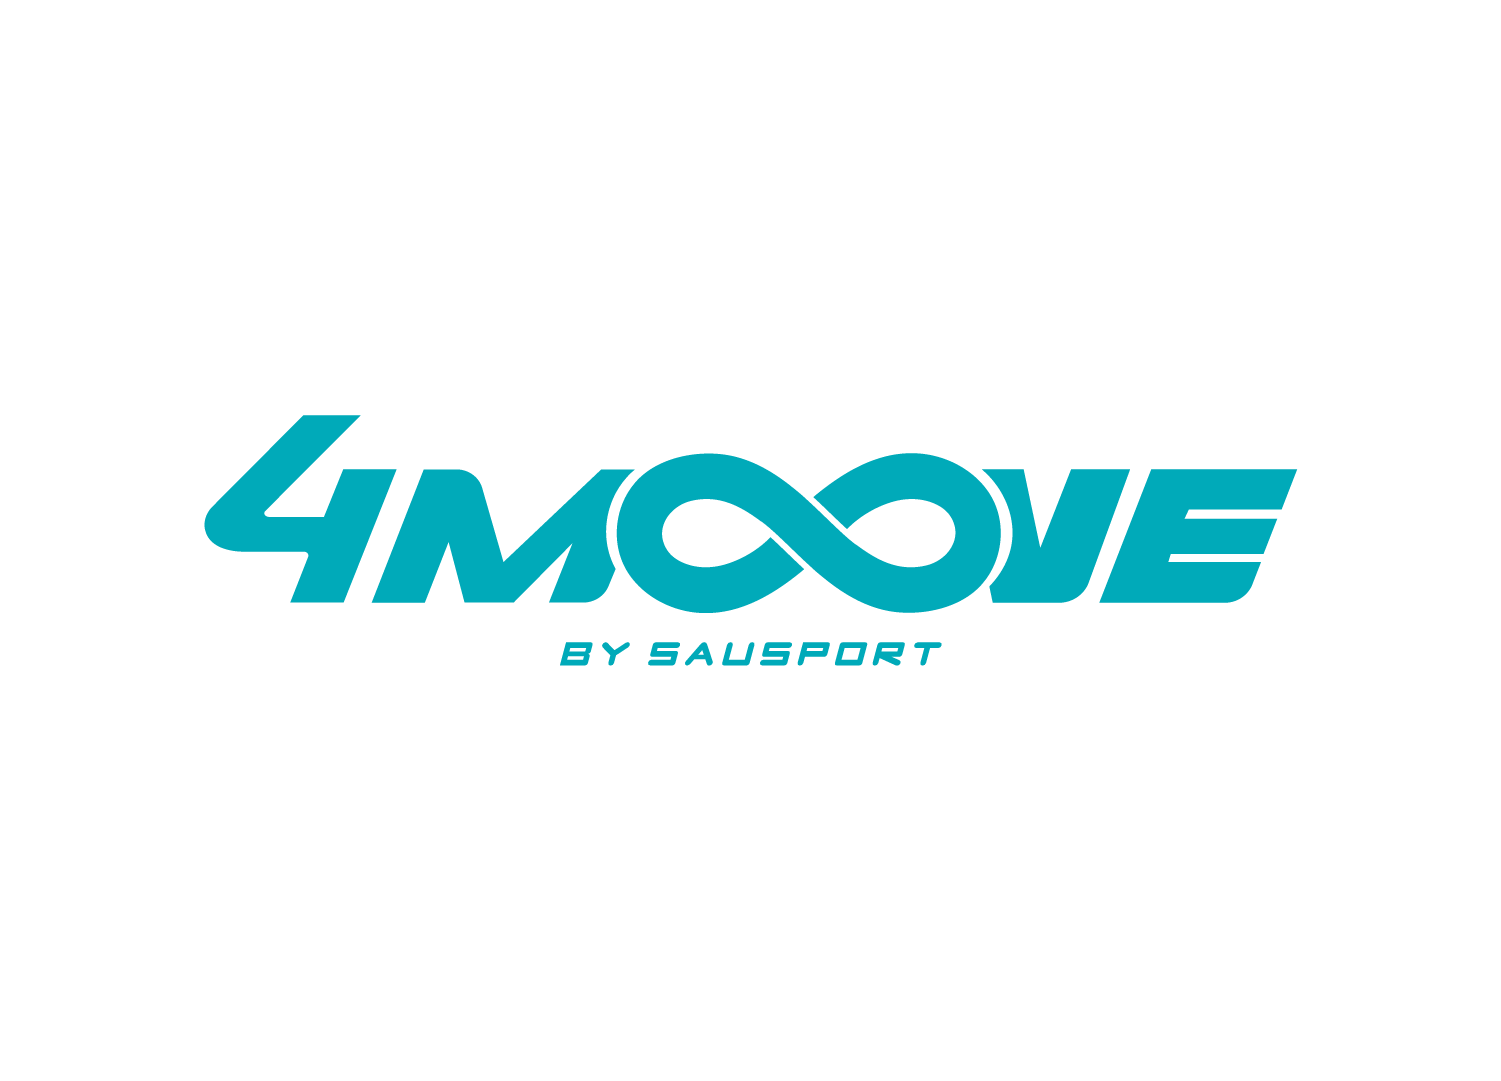 4moove Logo